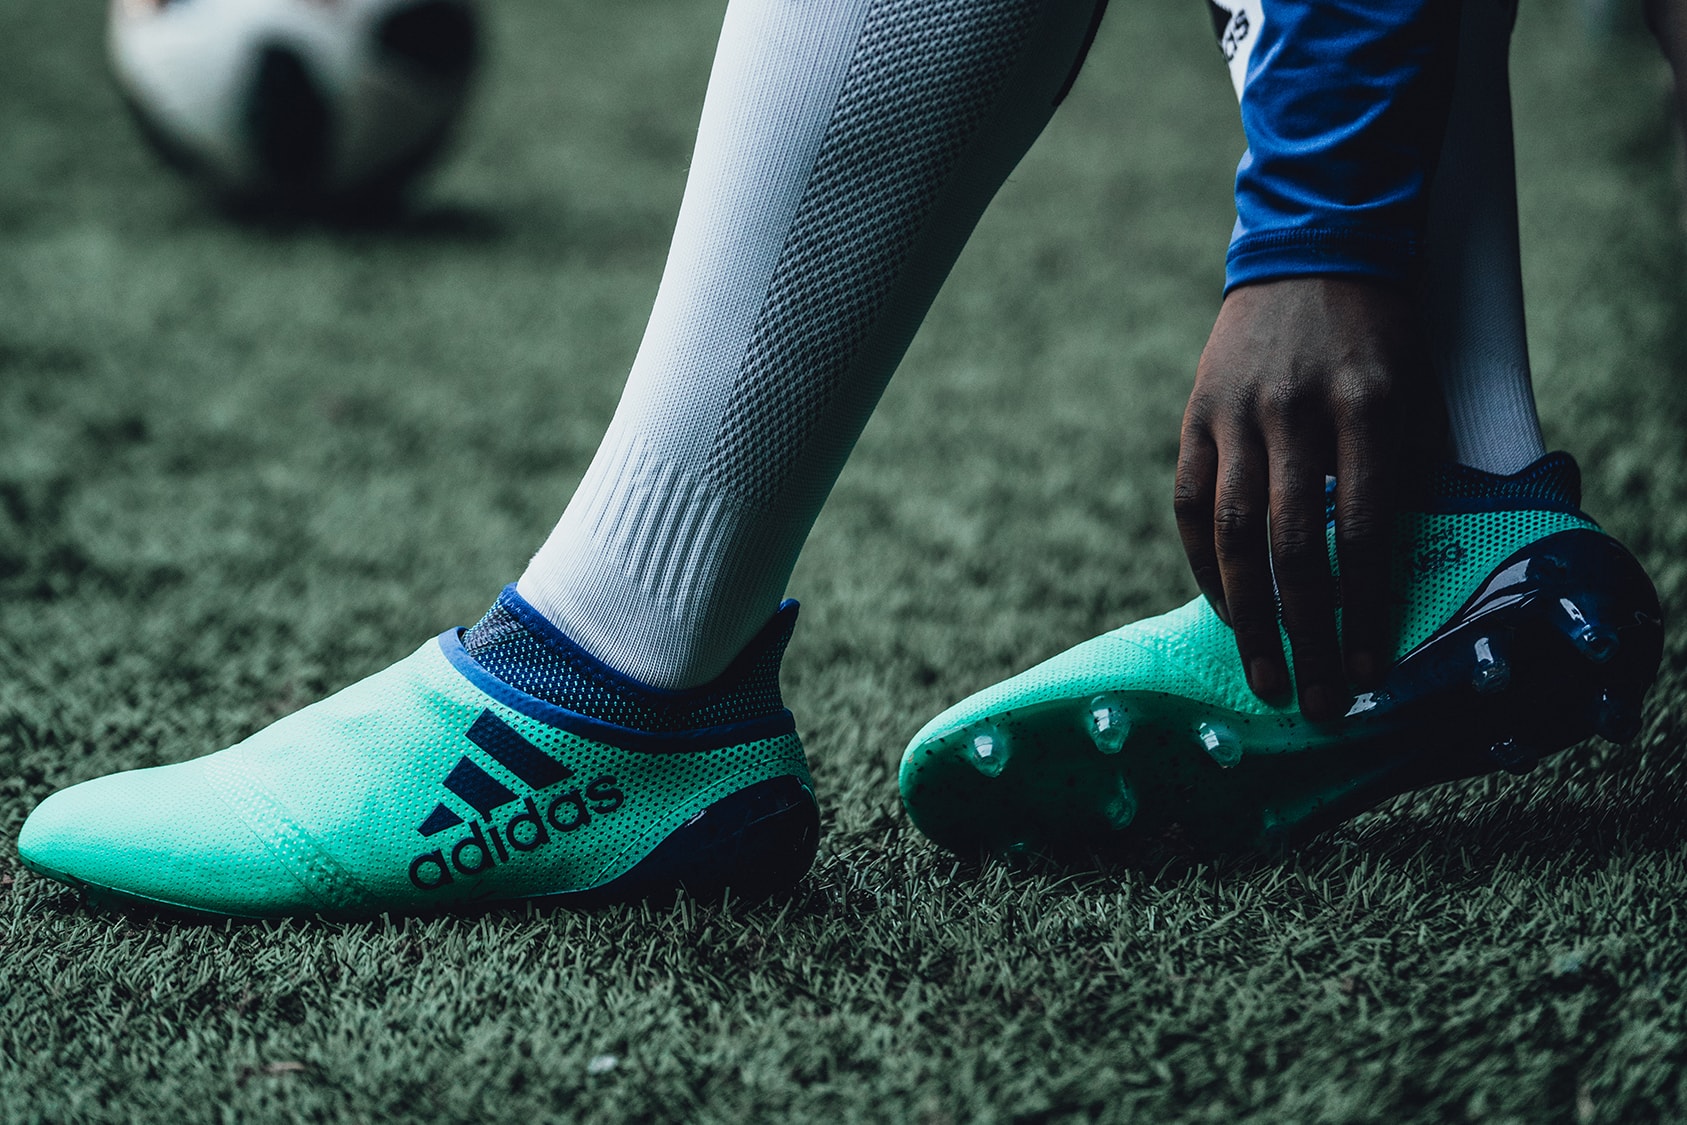 adidas Football Deadly Strike Predator NEMEZIZ Copa X17 Boots Lionel Messi Cleats 2018 World Cup soccer